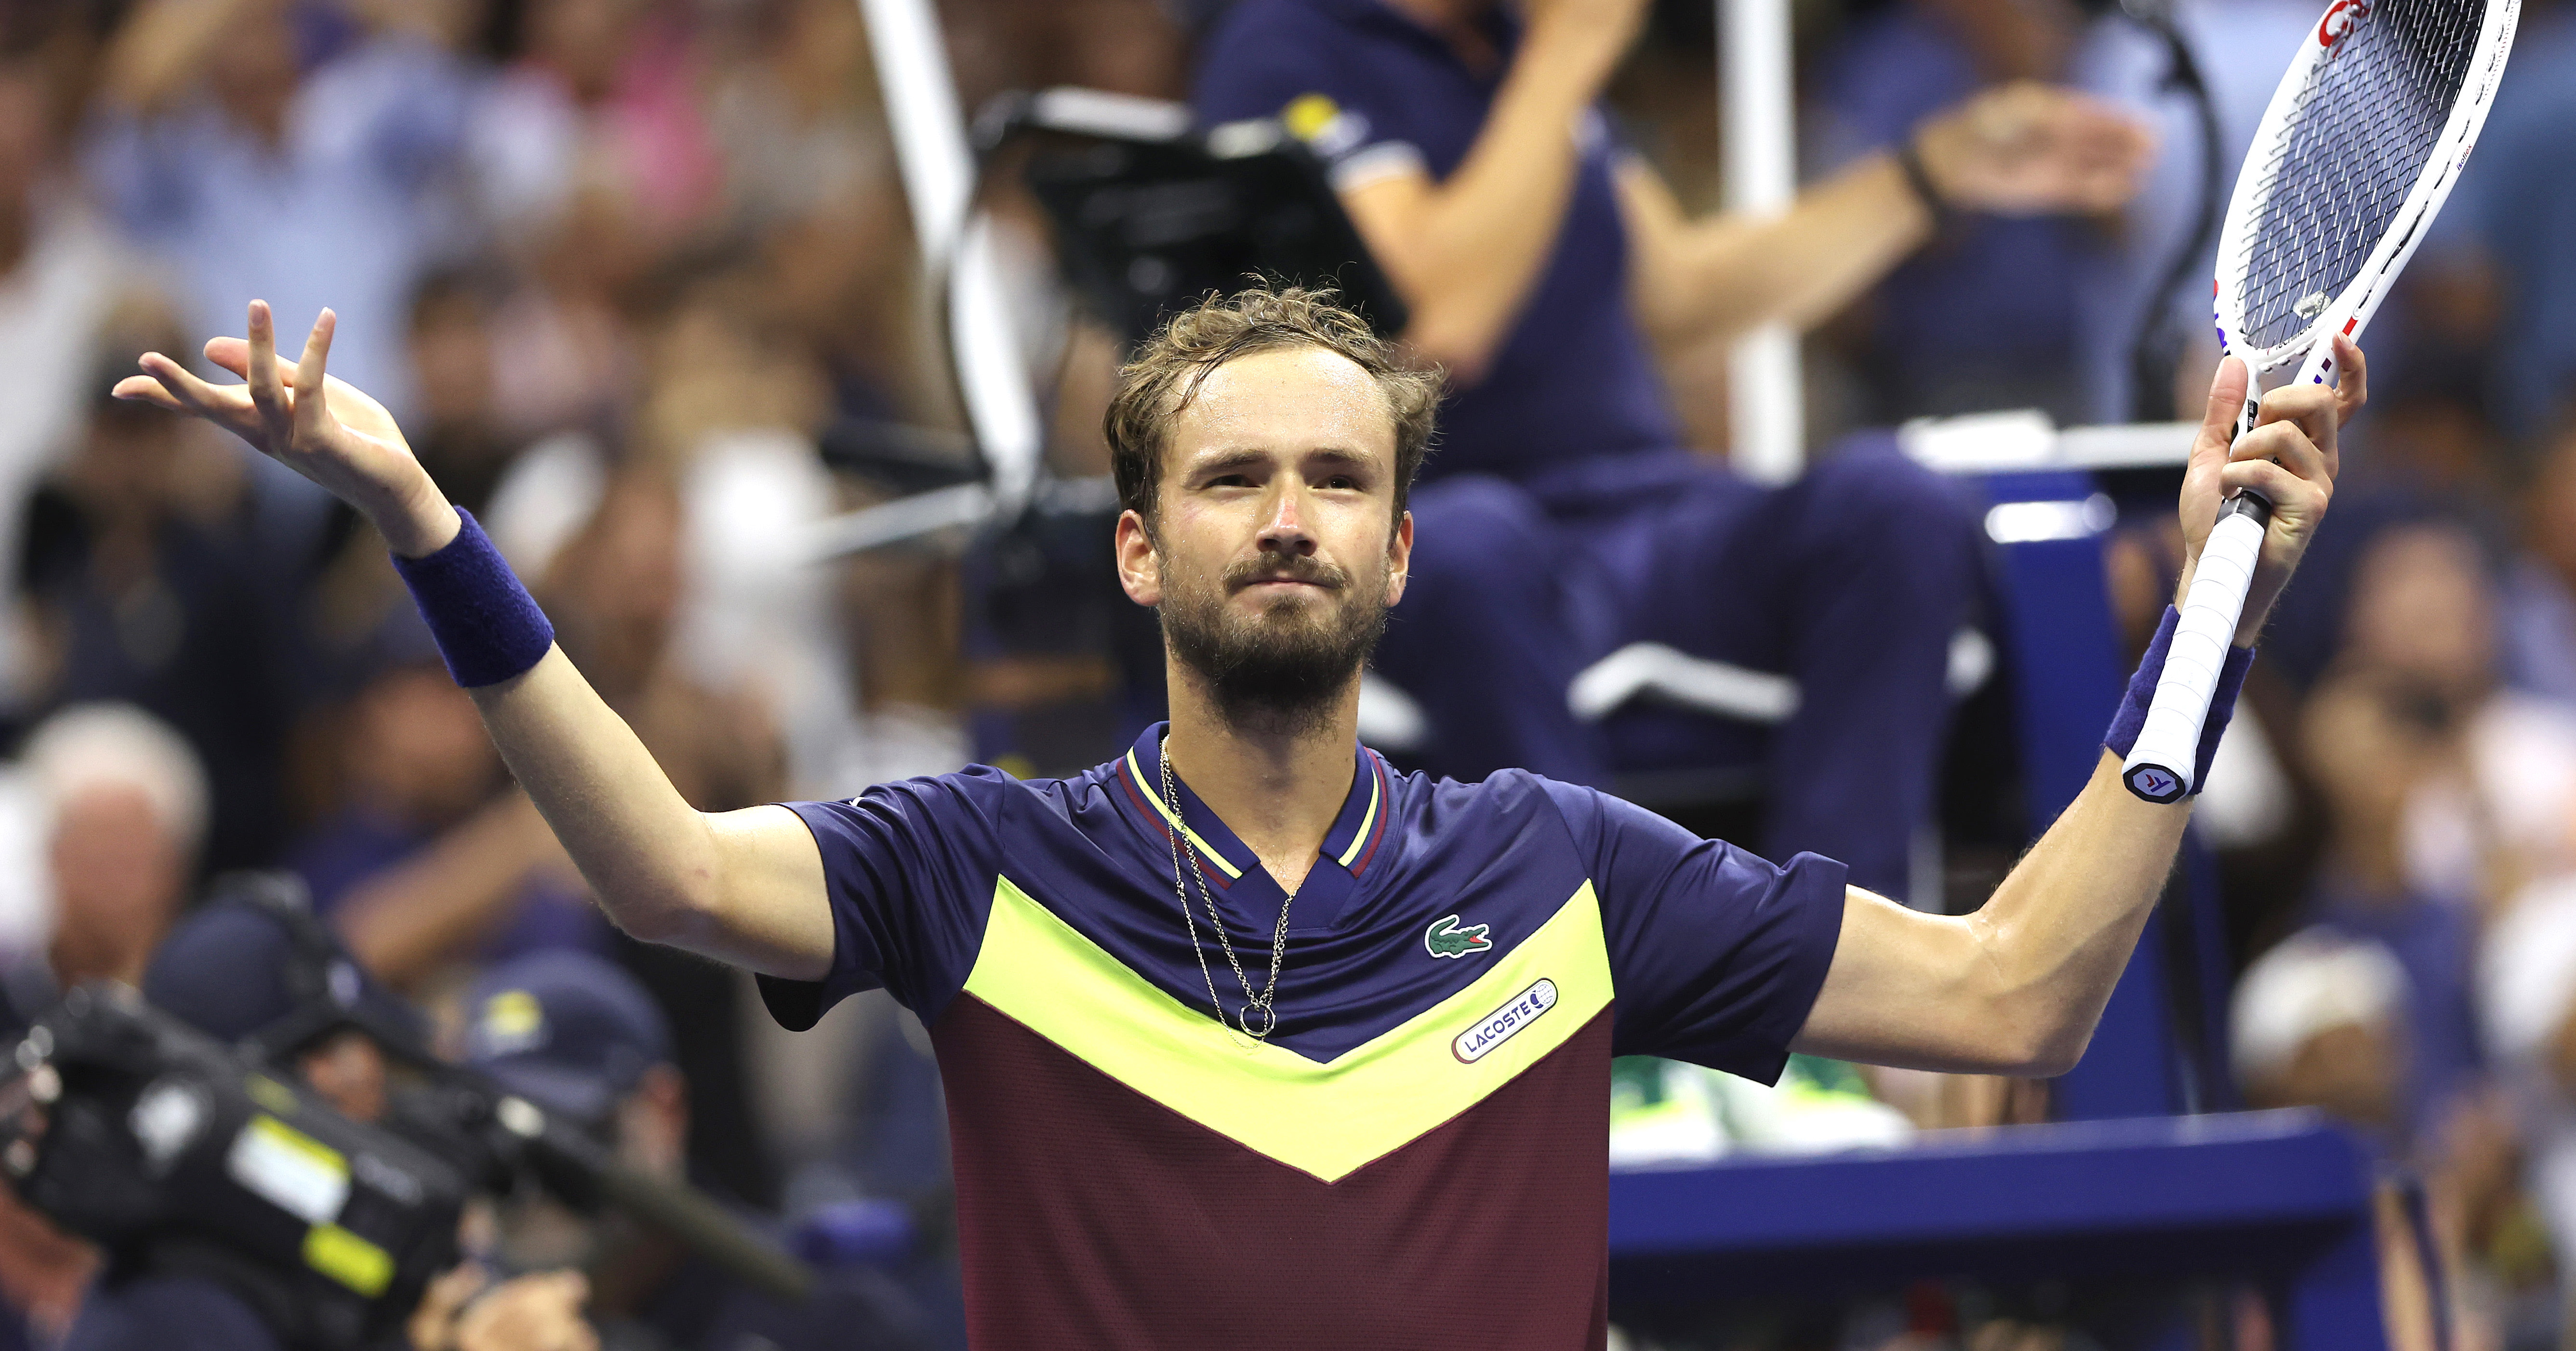 Dubai Tennis Championships: Djokovic, Medvedev to face off in